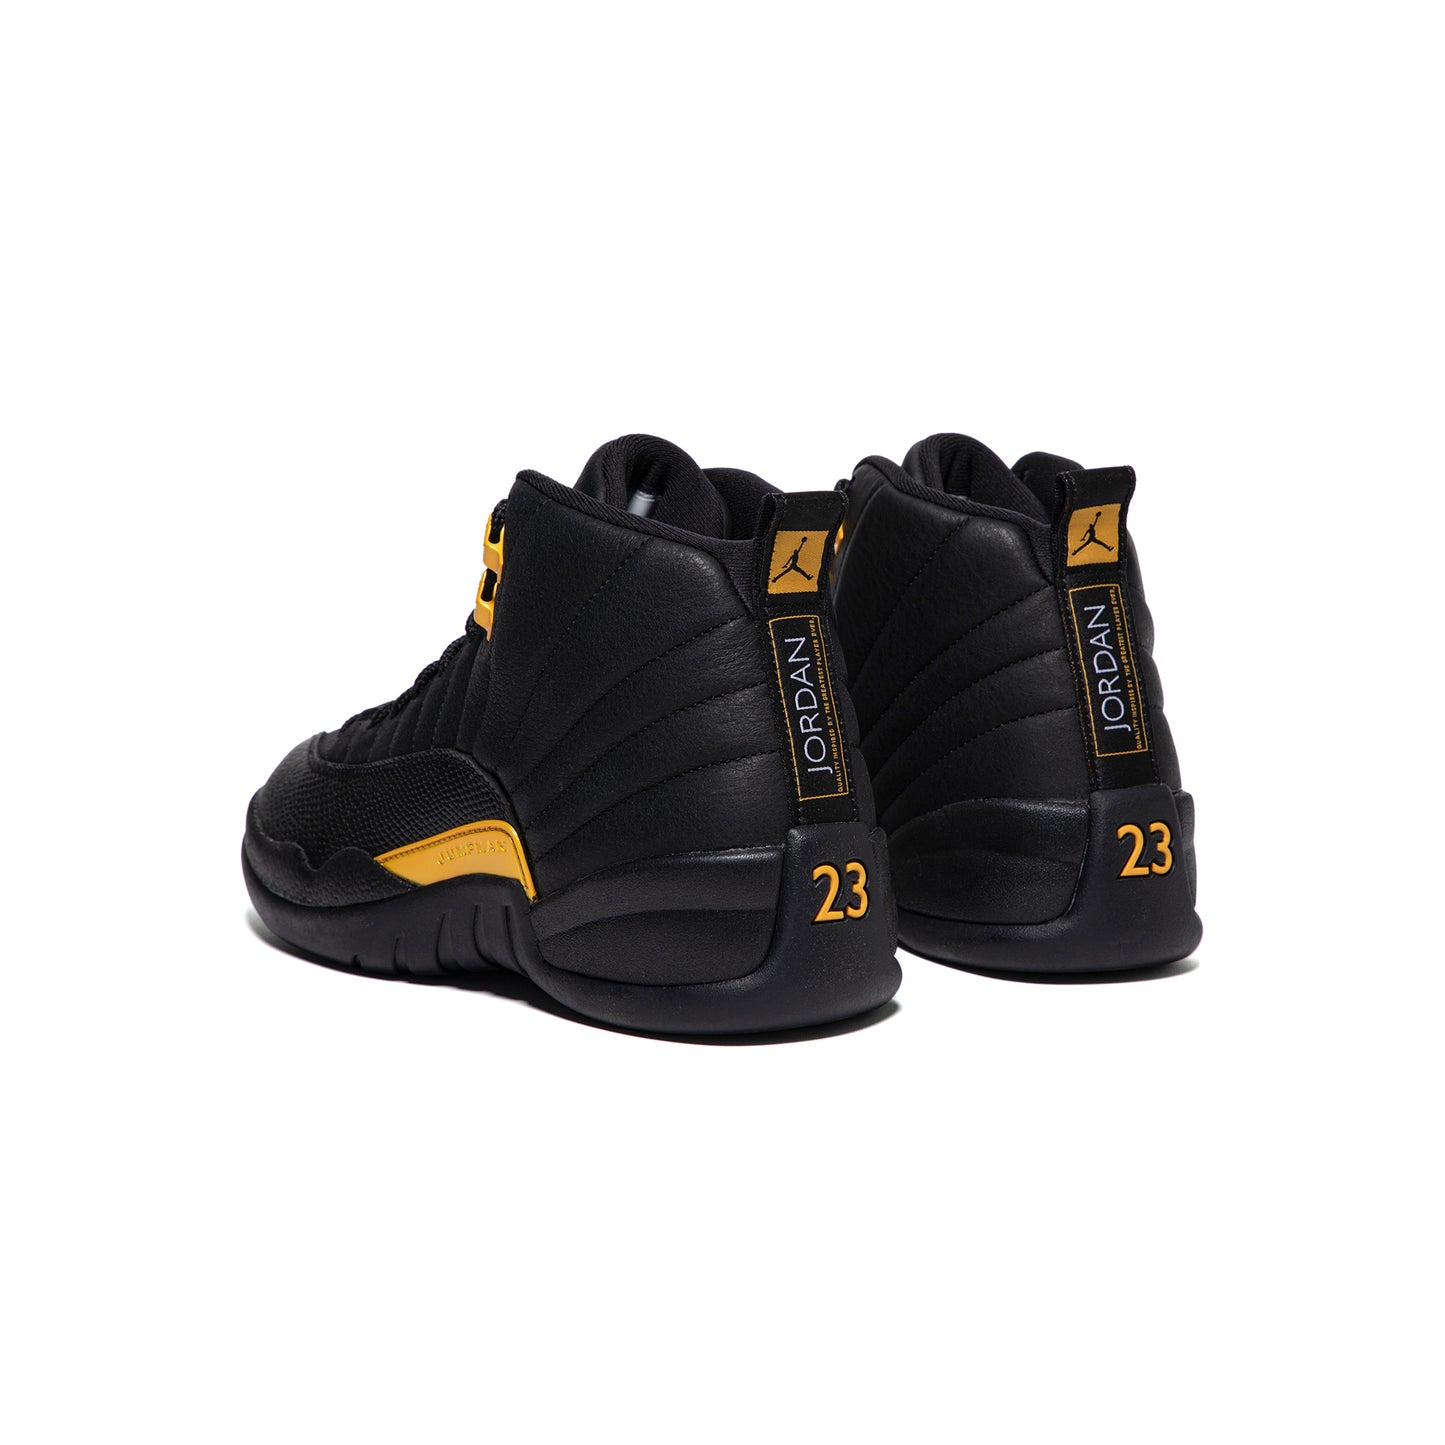 Nike Air Jordan 12 Retro (Black/Taxi)